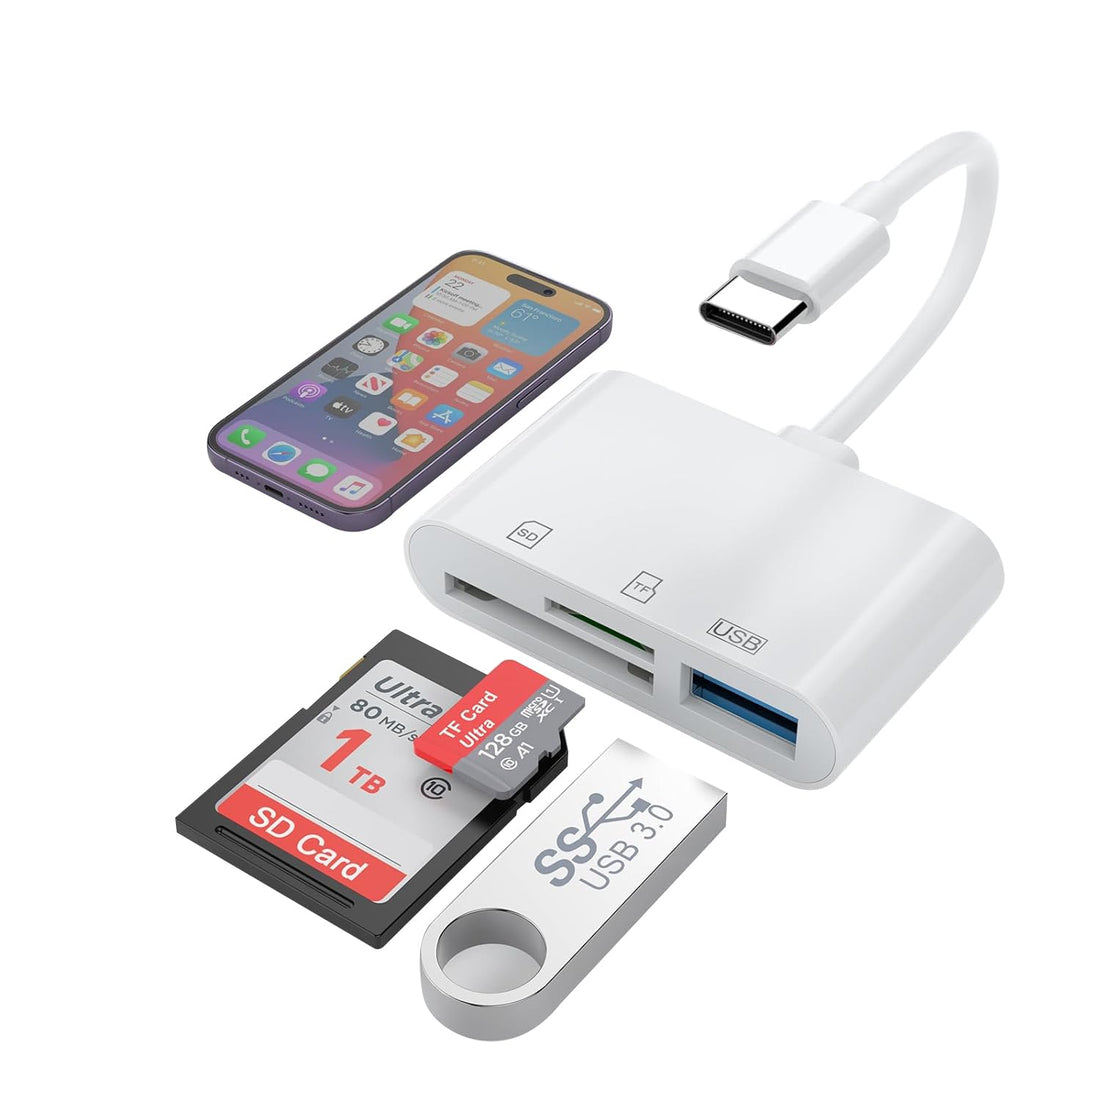 USB C SD Card Reader, USB C to SD Card for iPhone 15/iPad/Mac/Laptop, USB-C/Type C Memory Card Adapter for iMac, iPad Pro/Air/Mini, MacBook Pro/Air, Galaxy, MicroSD/SD